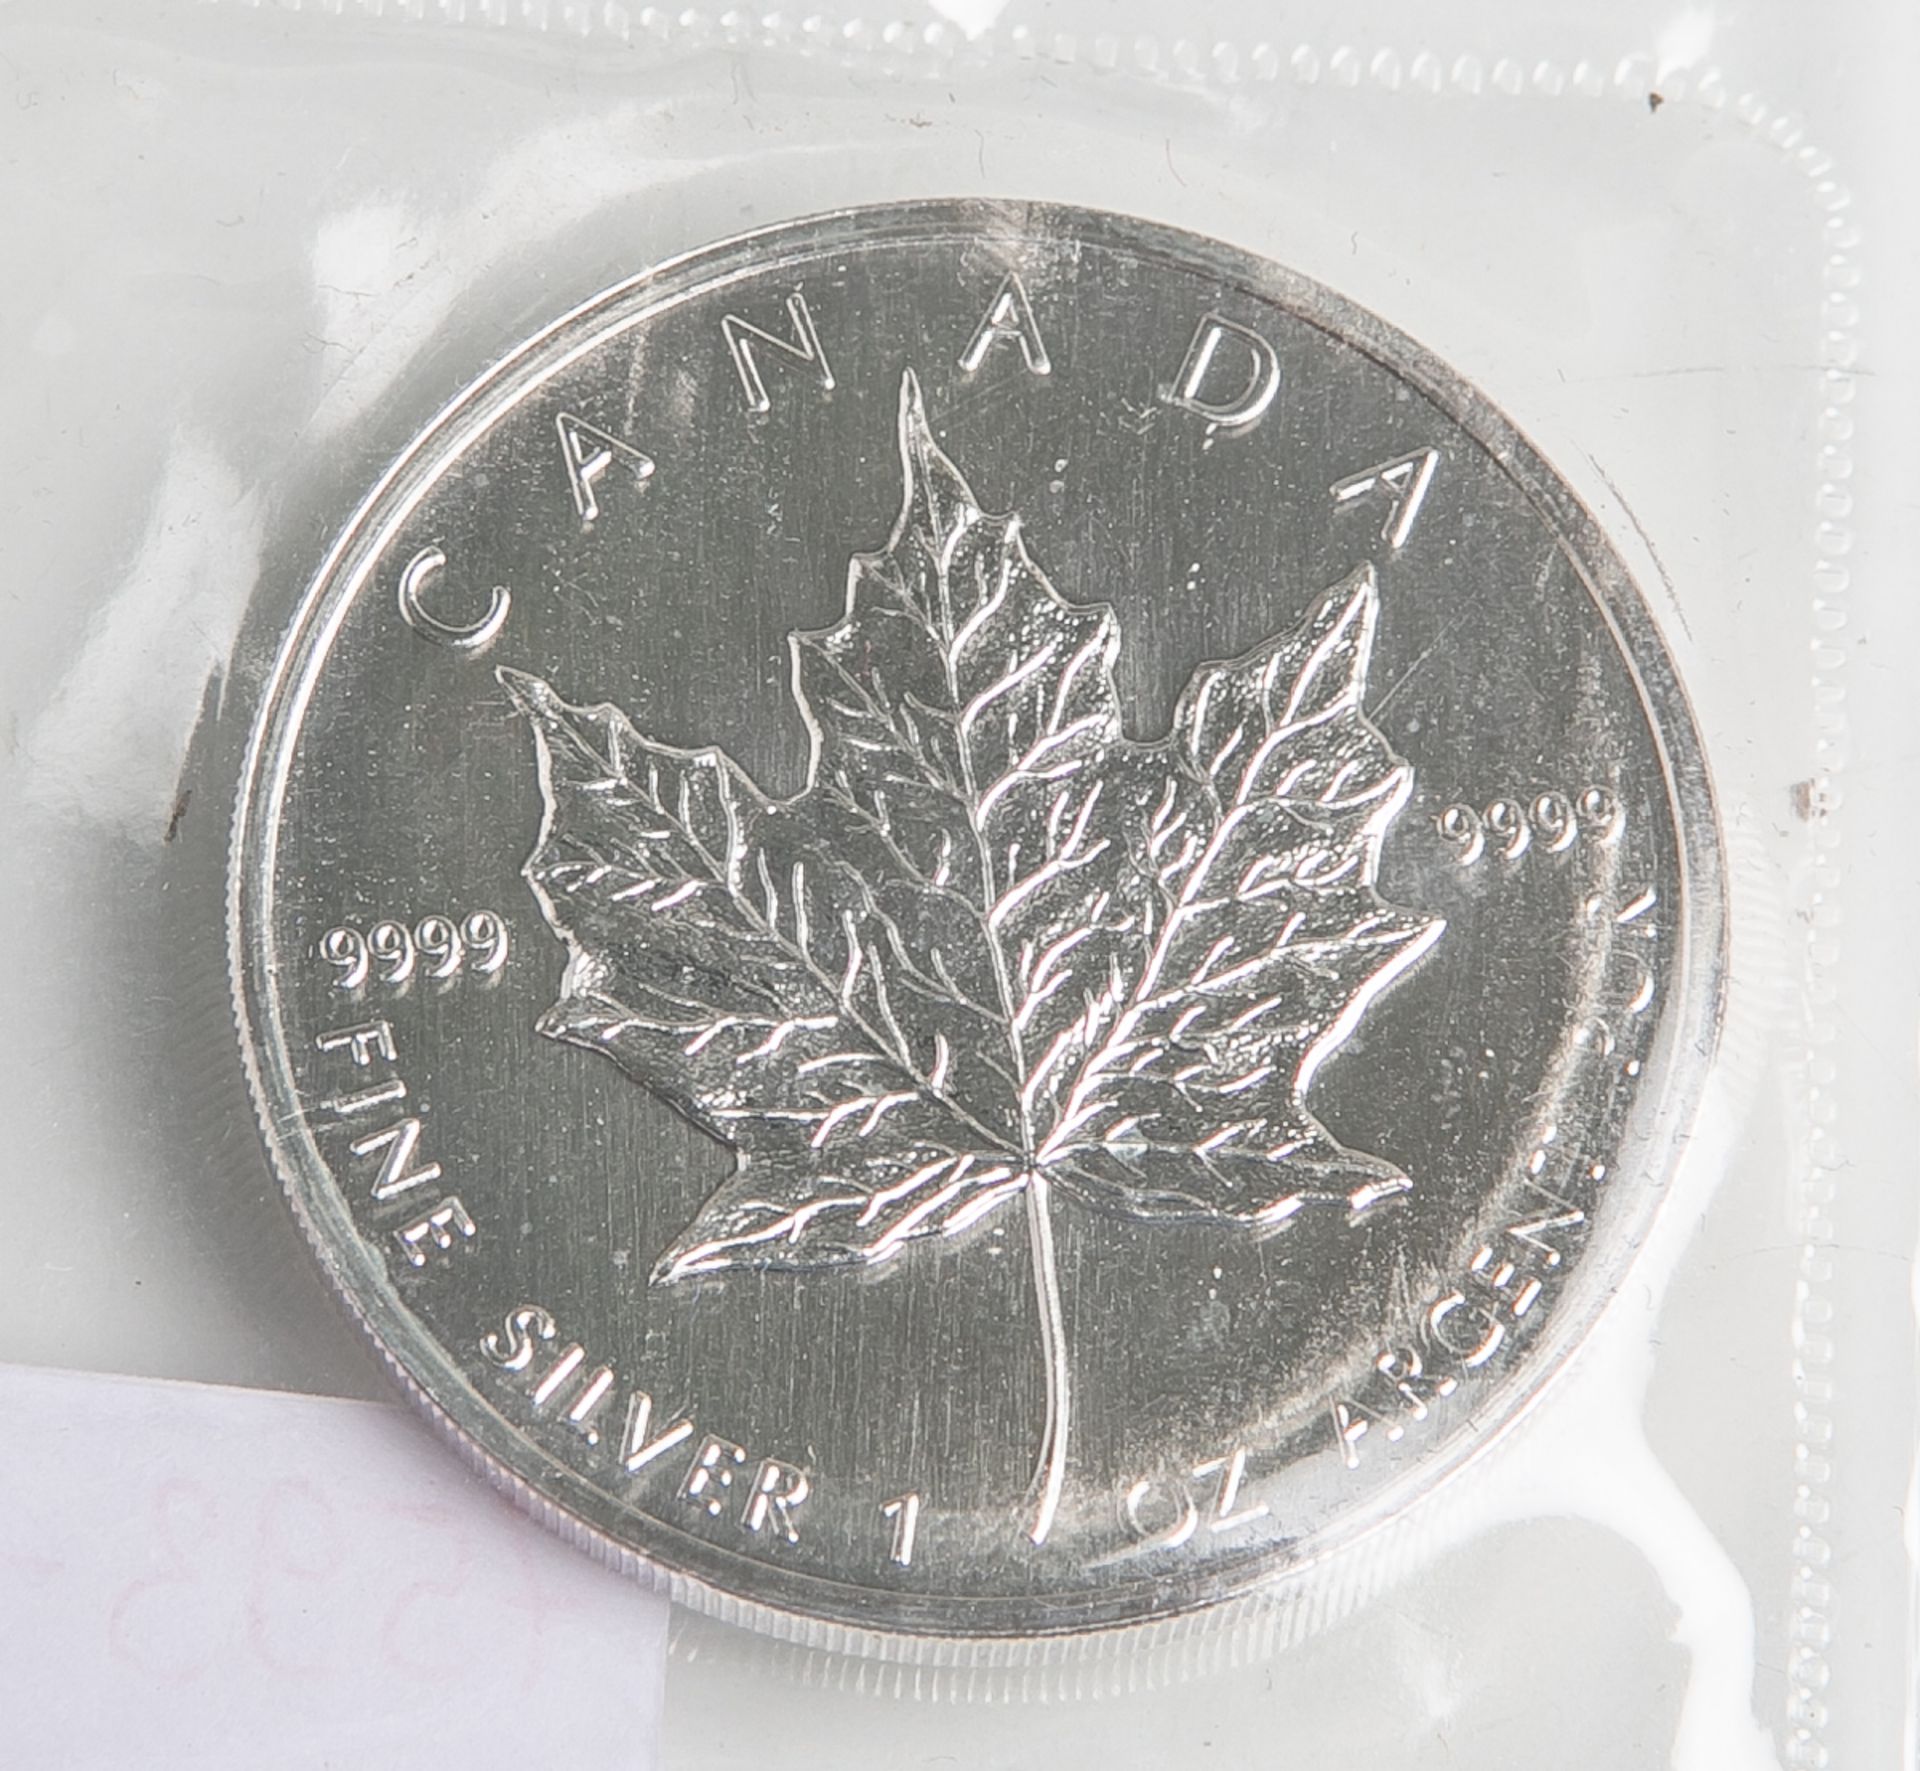 5 Dollars "Elizabeth II." (Kanada, 1989), Silber, Büste der Königin, Rs: Ahornblatt, 1 OZ,9999 9999,